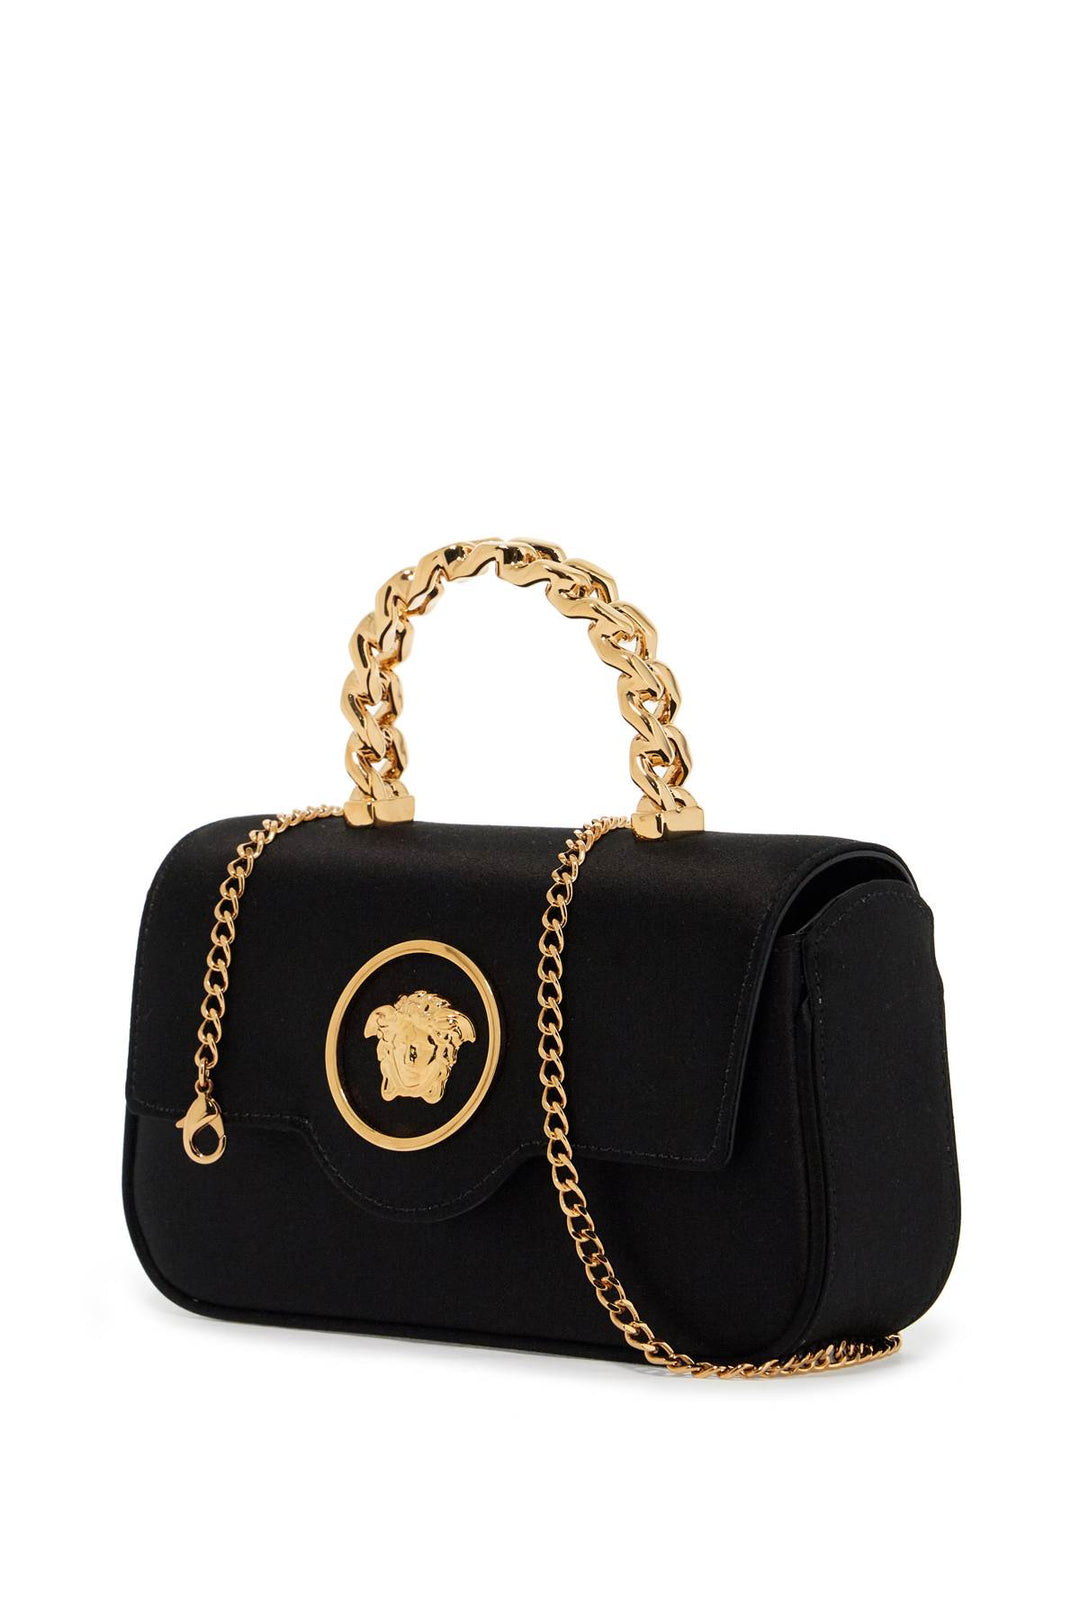 Versace Mini Satin Bag With Medusa Design   Black